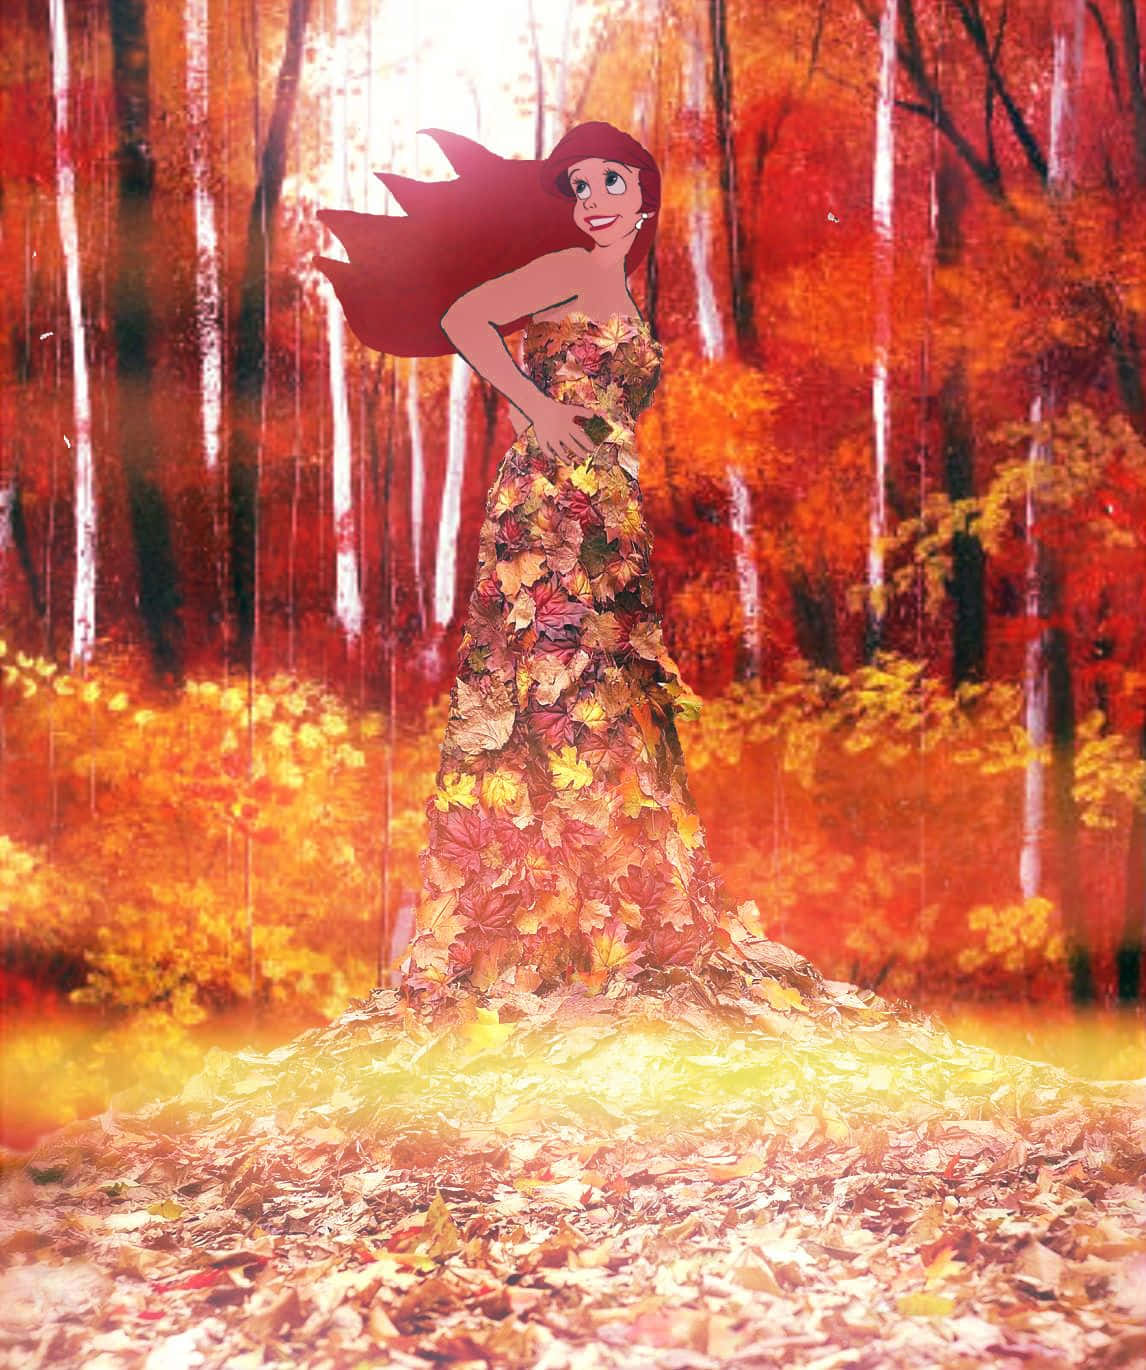 hello there  Autumn in Disney Movies lockscreenswallpapers